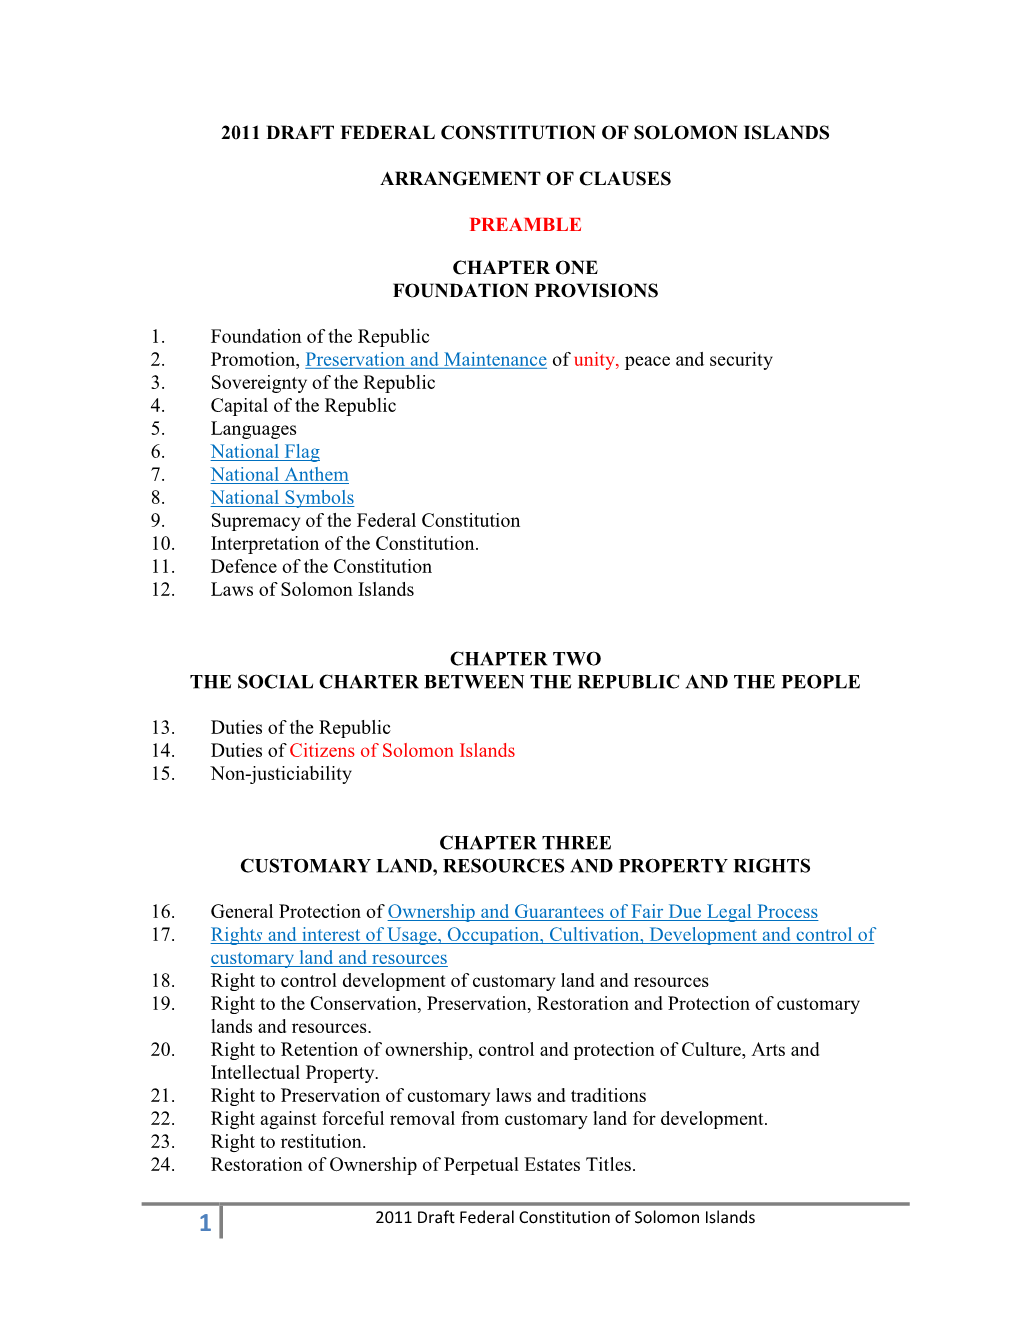 2011 Draft Federal Constitution of Solomon Islands